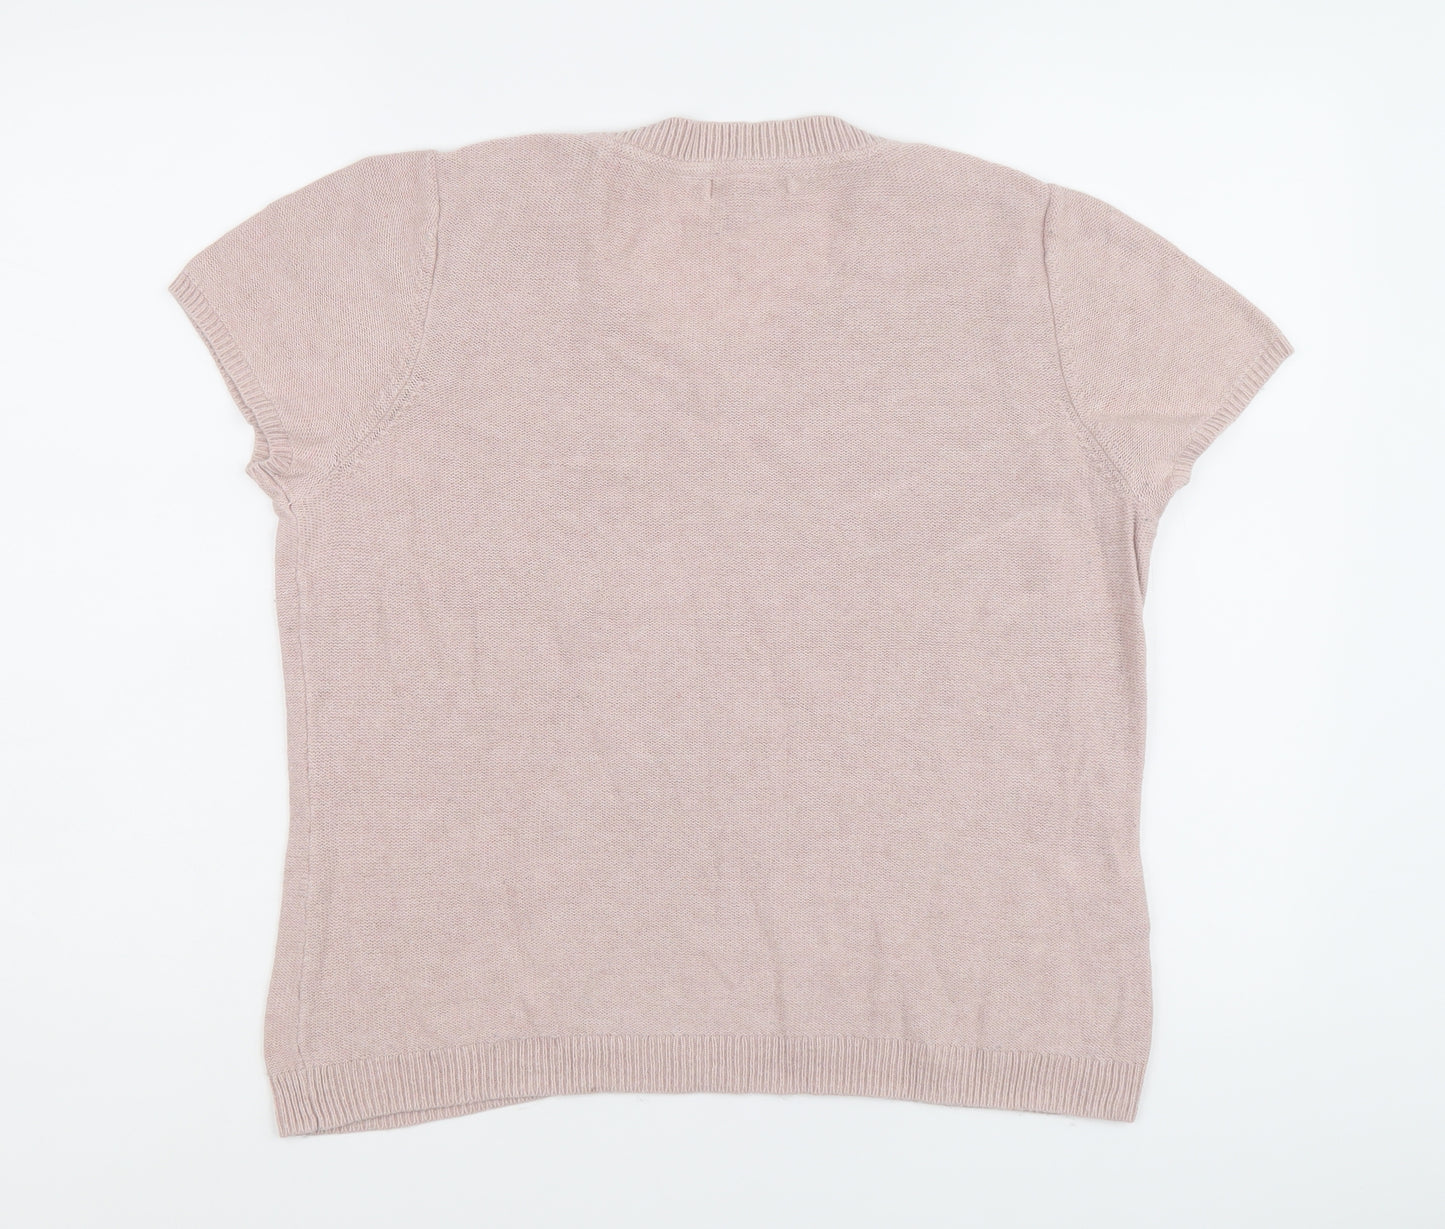 Laura Ashley Womens Pink Round Neck Cotton Pullover Jumper Size 16